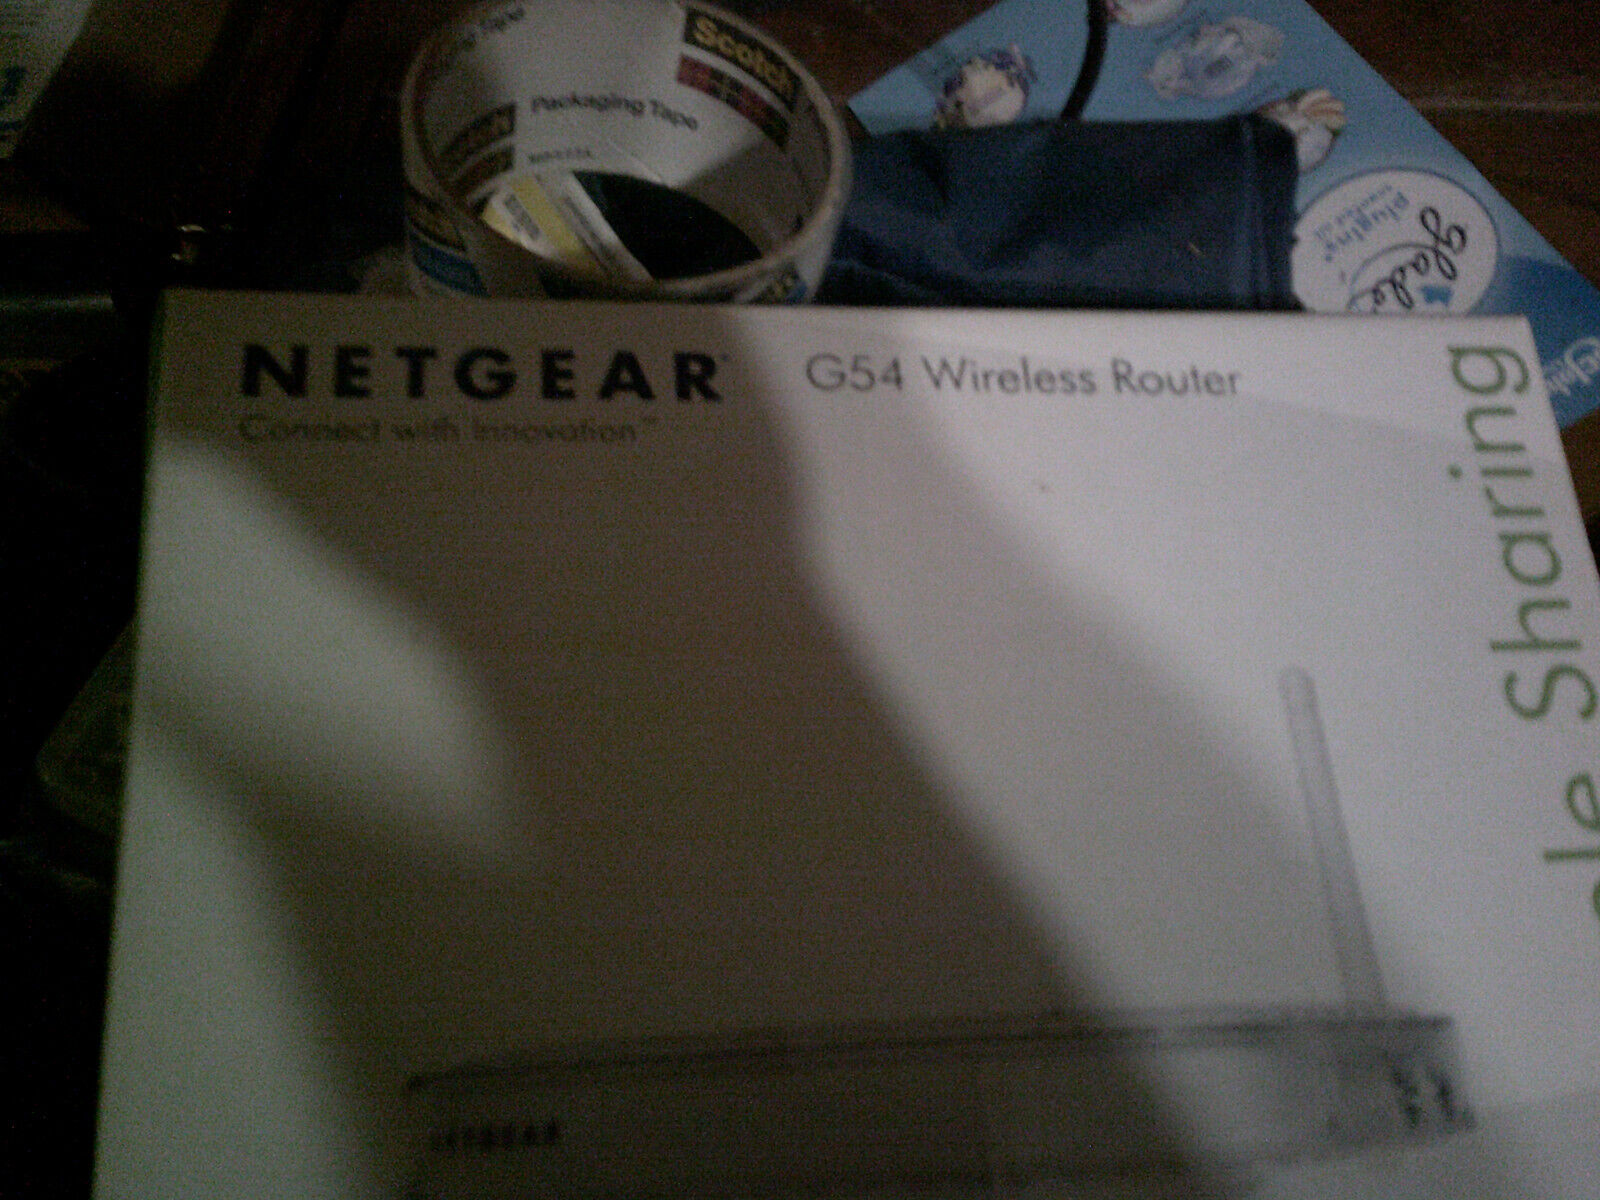 netgear g54/n150 wireless router